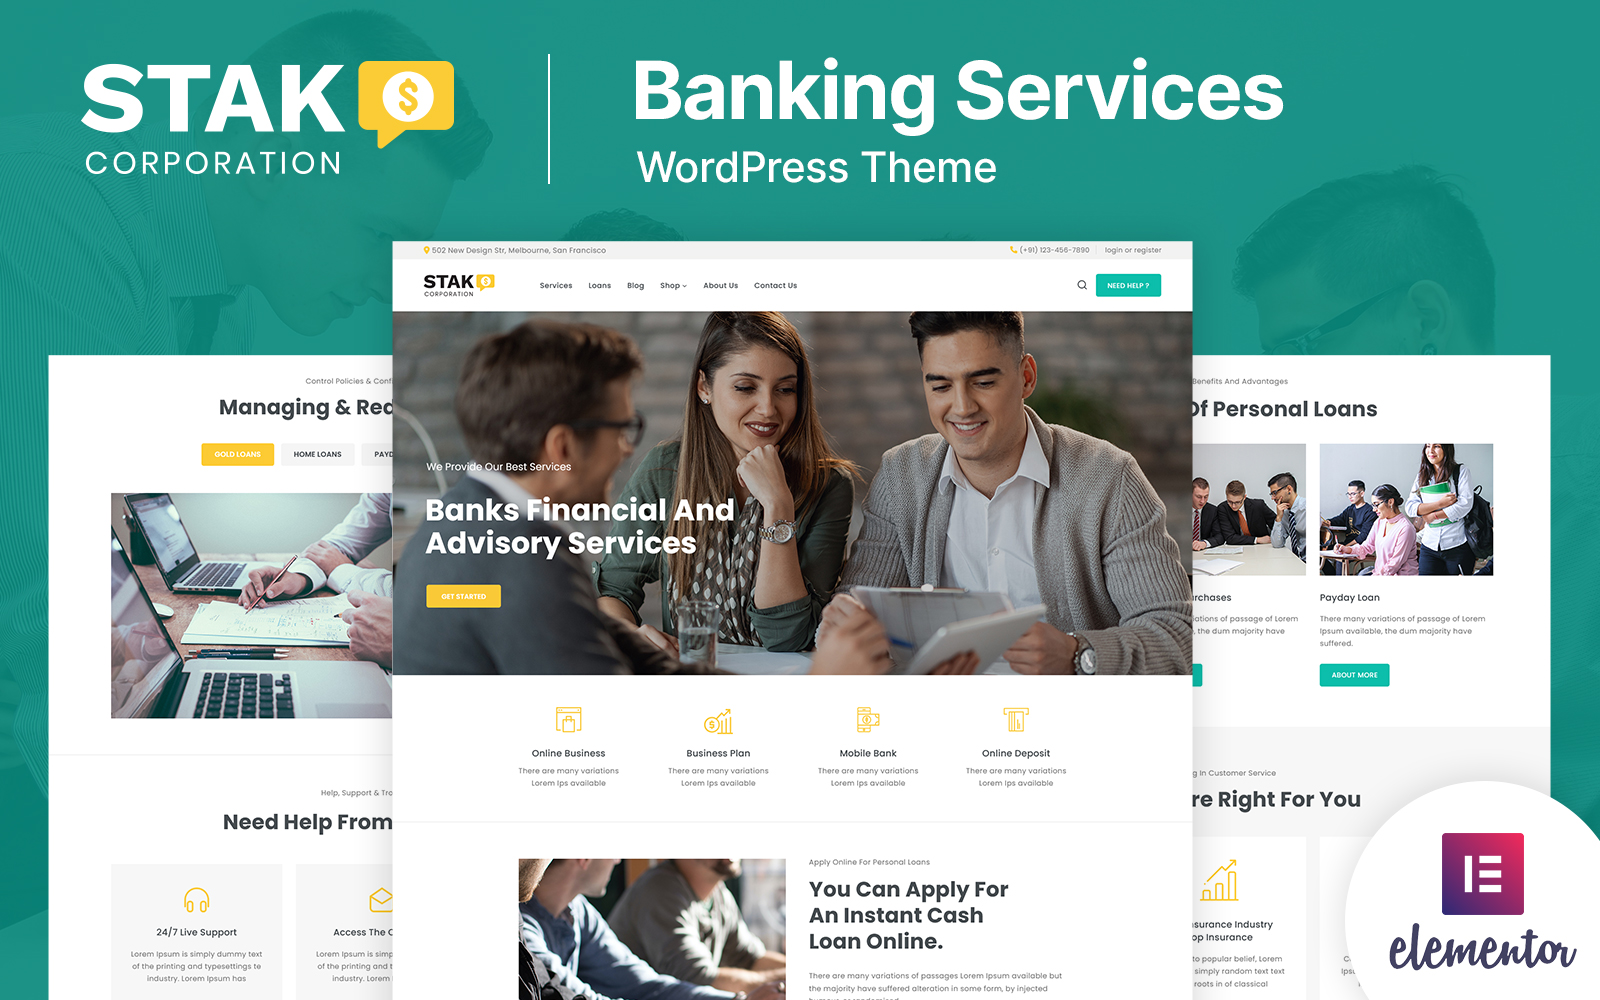 Stak - Banking, Loan Business and Finance WordPress Theme